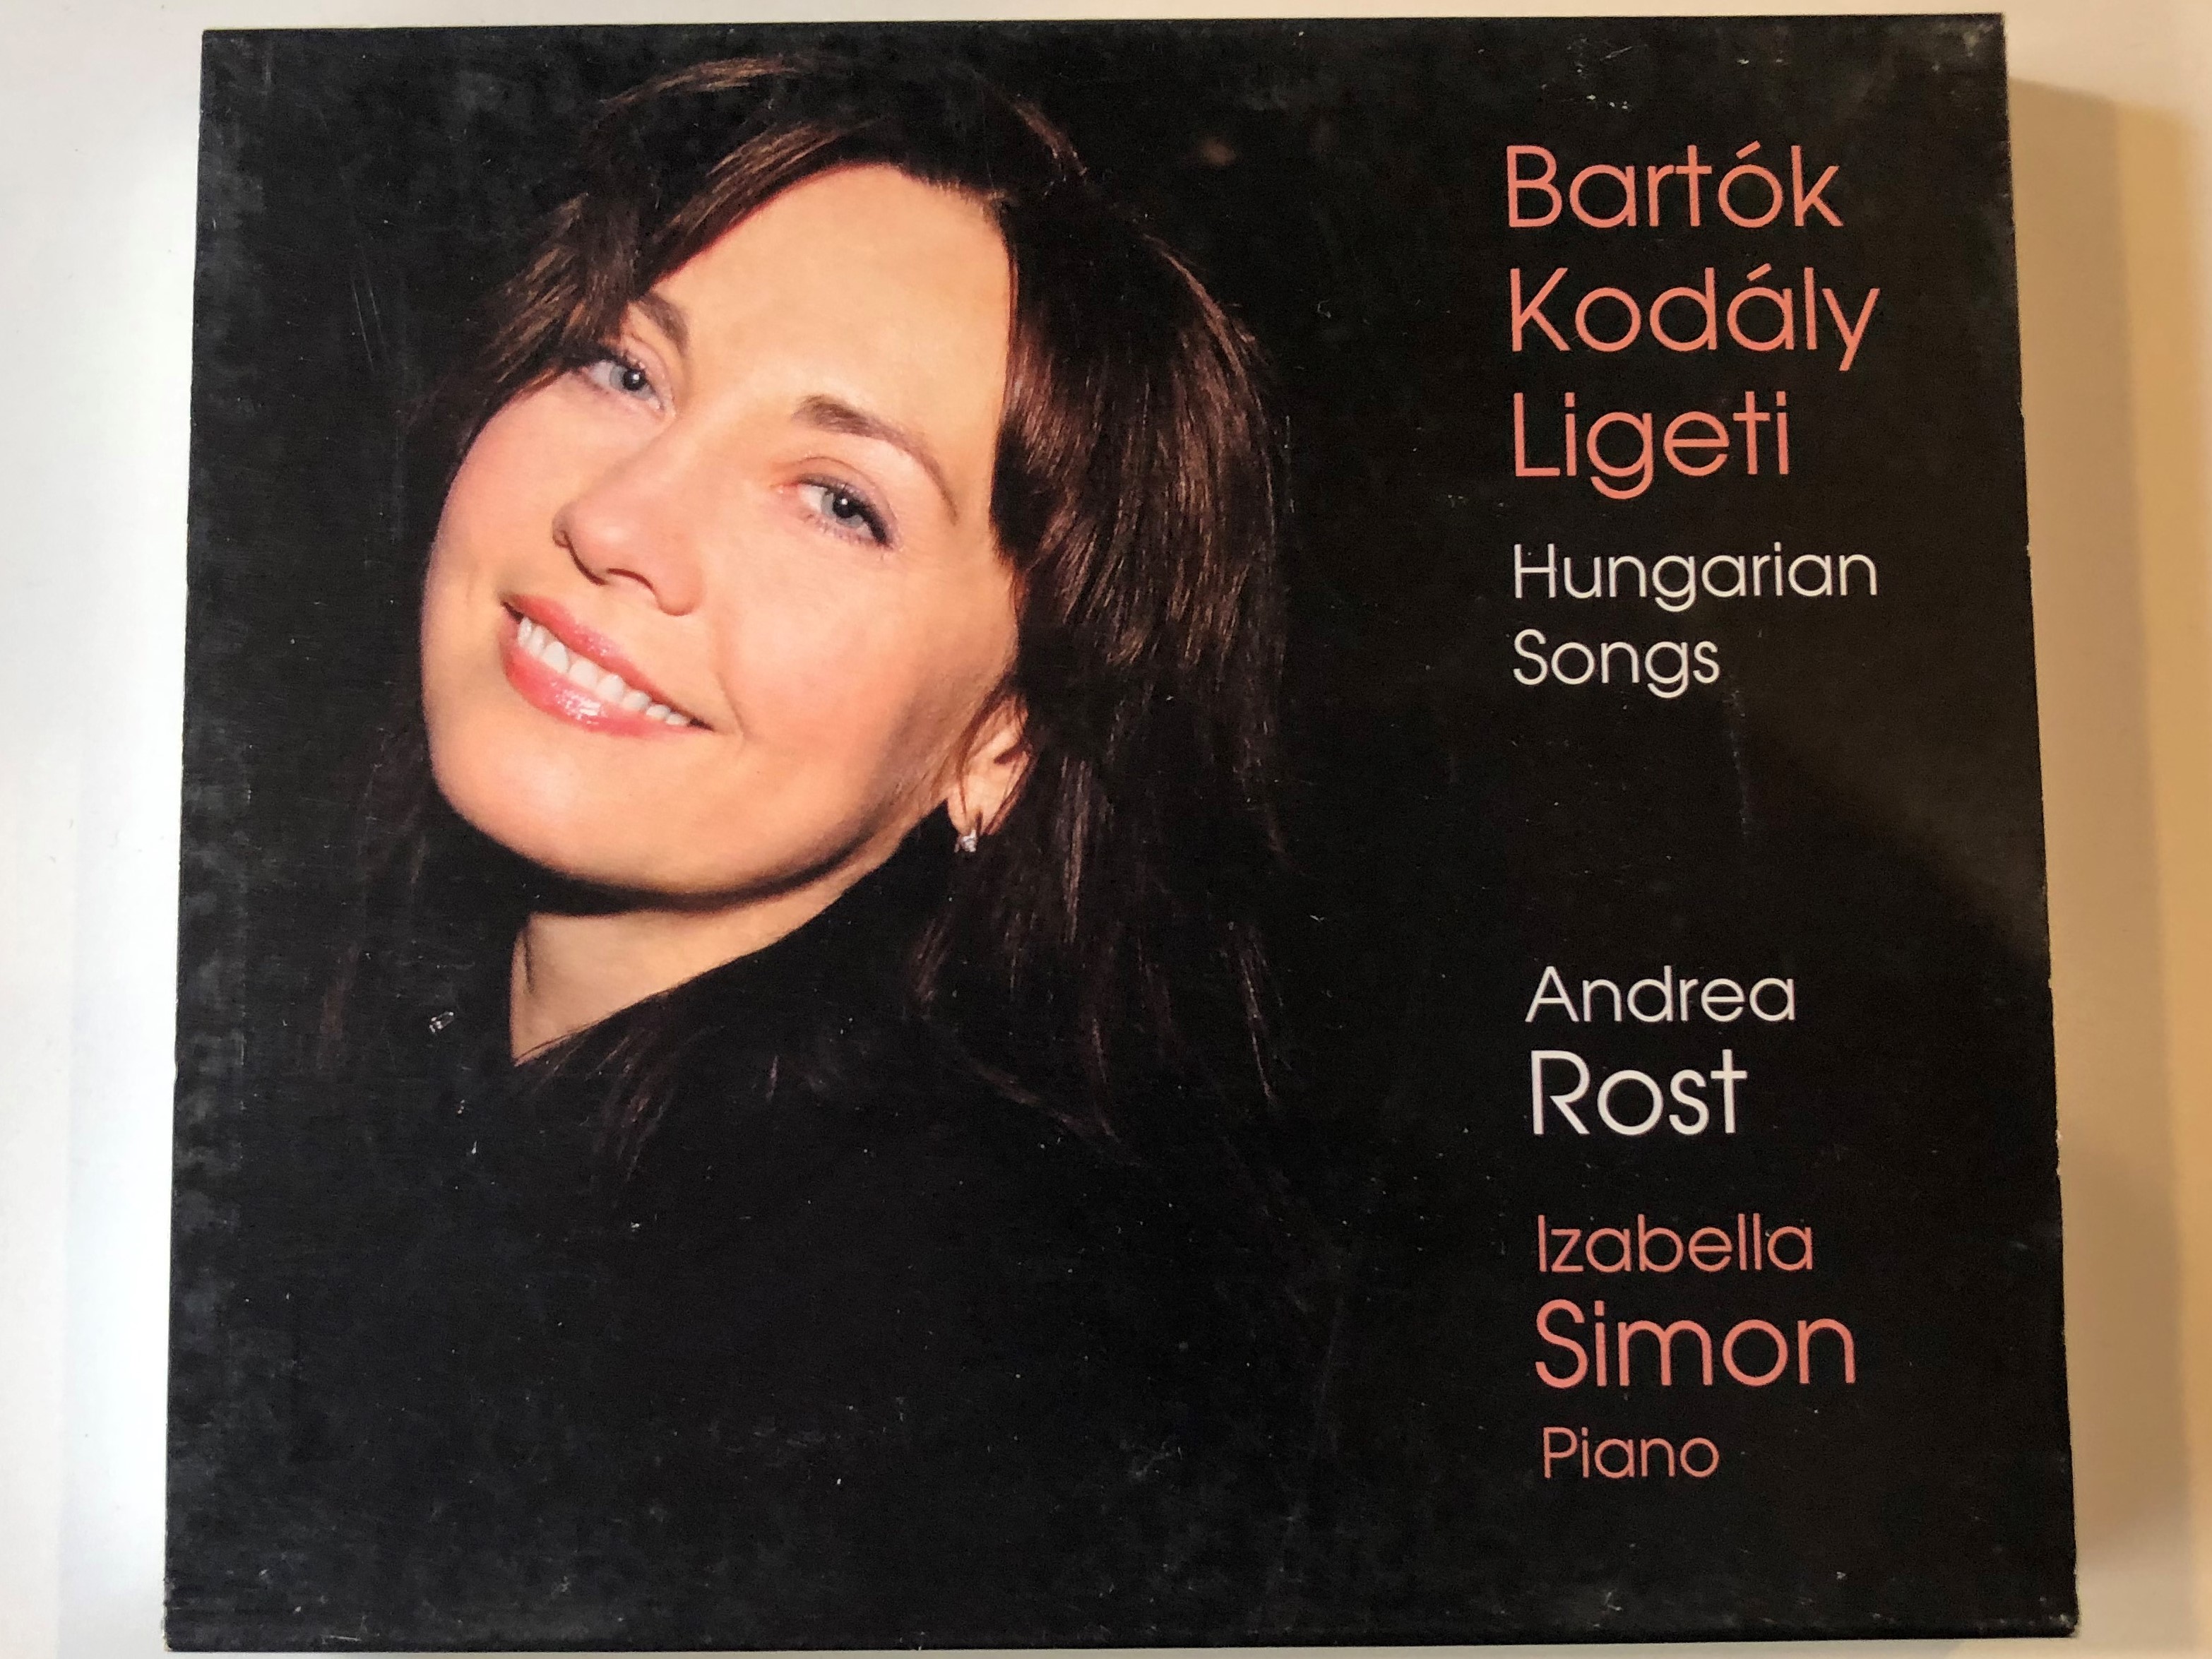 bartok-kodaly-ligeti-hungarian-songs-andrea-rost-izabella-simon-piano-warner-classics-and-jazz-audio-cd-2008-2564-69518-3-1-.jpg